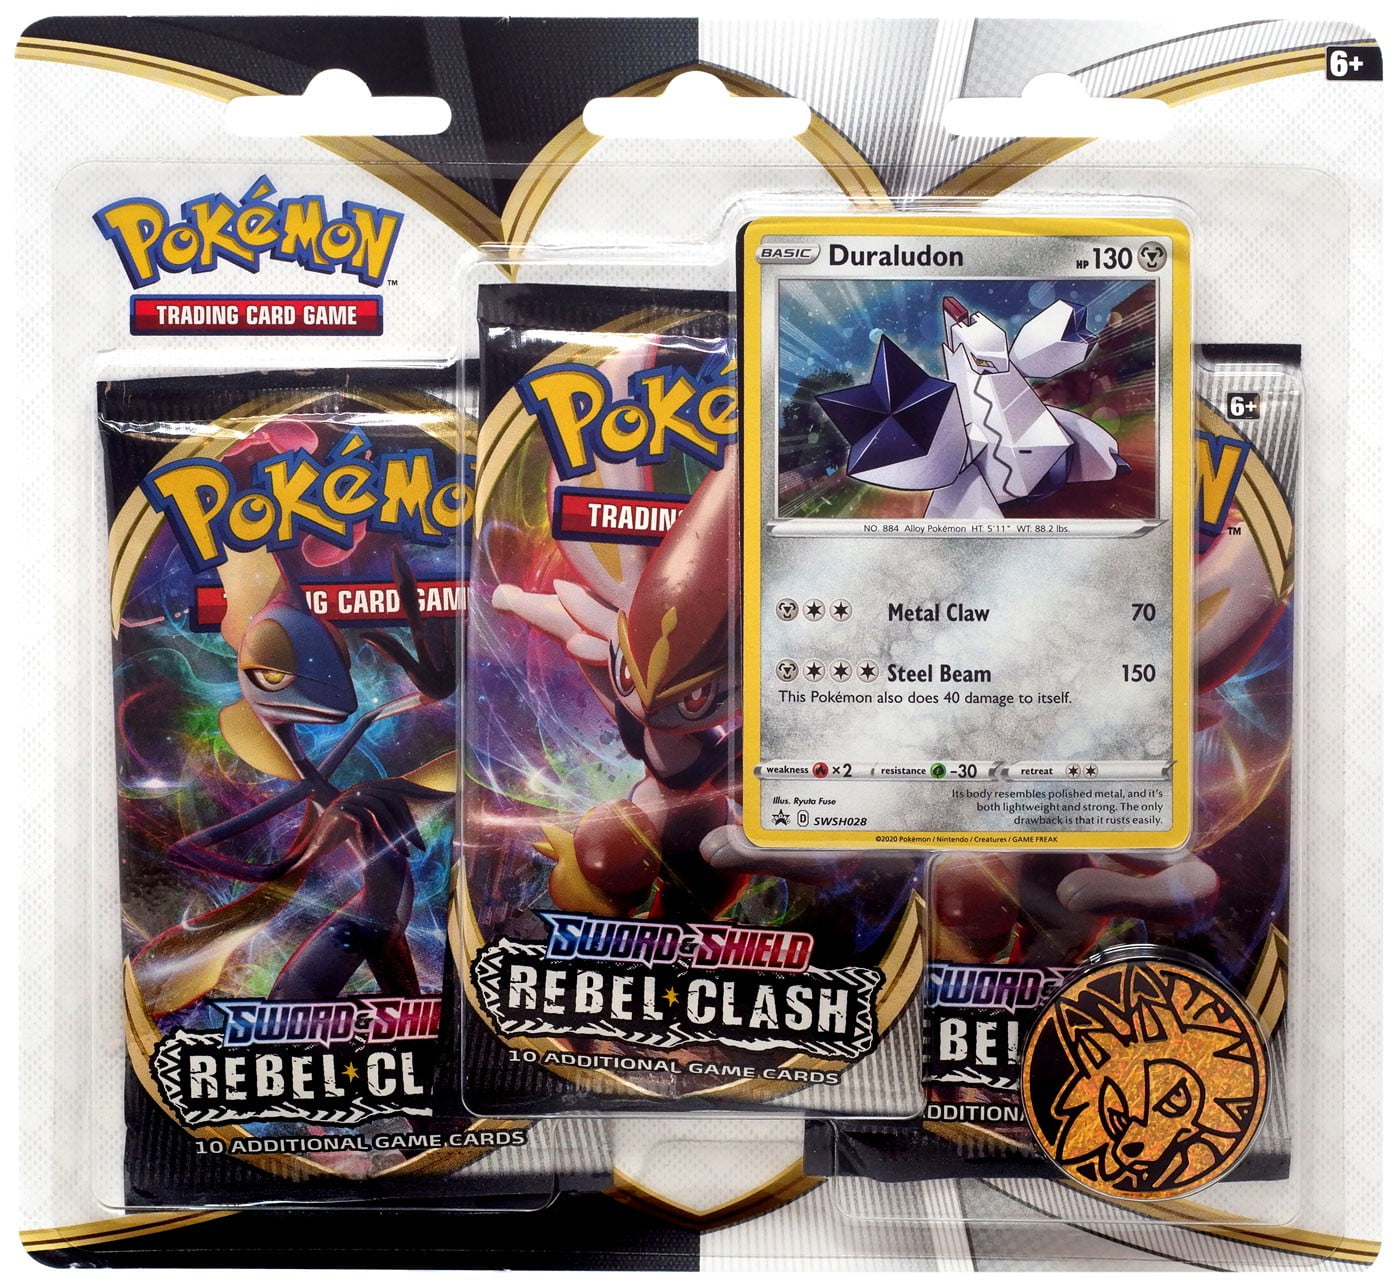 Pokémon Sword & Shield Rebel Clash Booster Pack & Mini Album SEALED NEW 